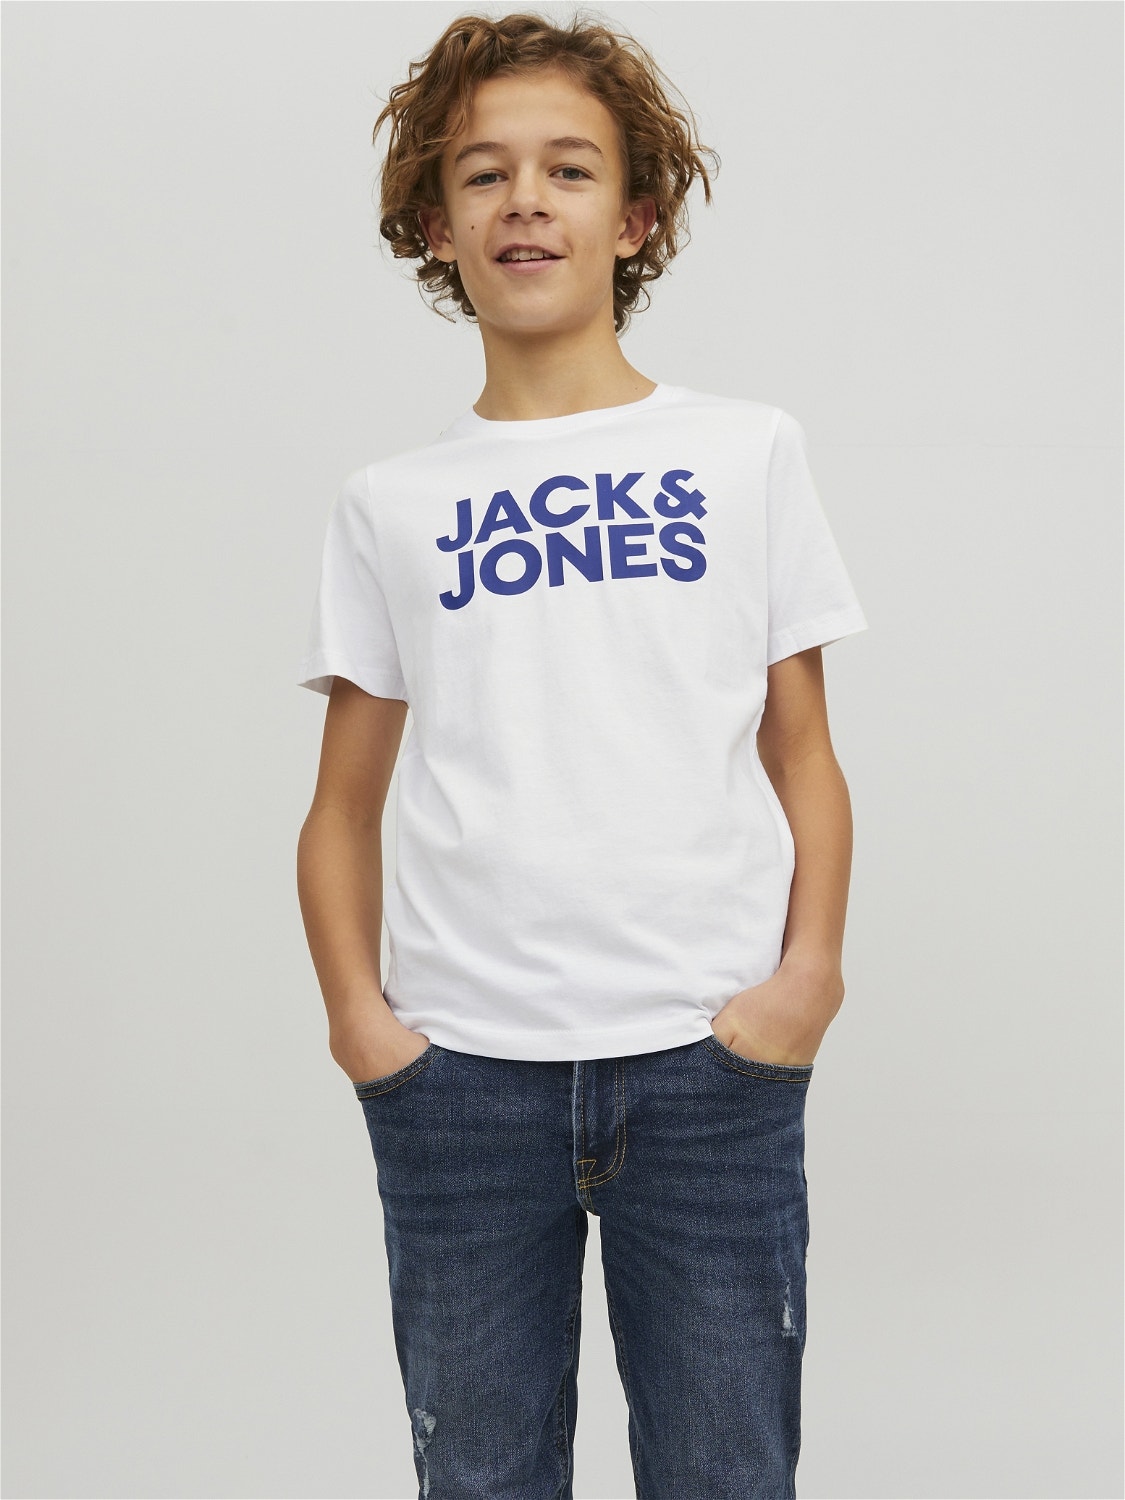 Jack & Jones Pack de 2 T-shirt Logo Pour les garçons -Navy Blazer - 12199947